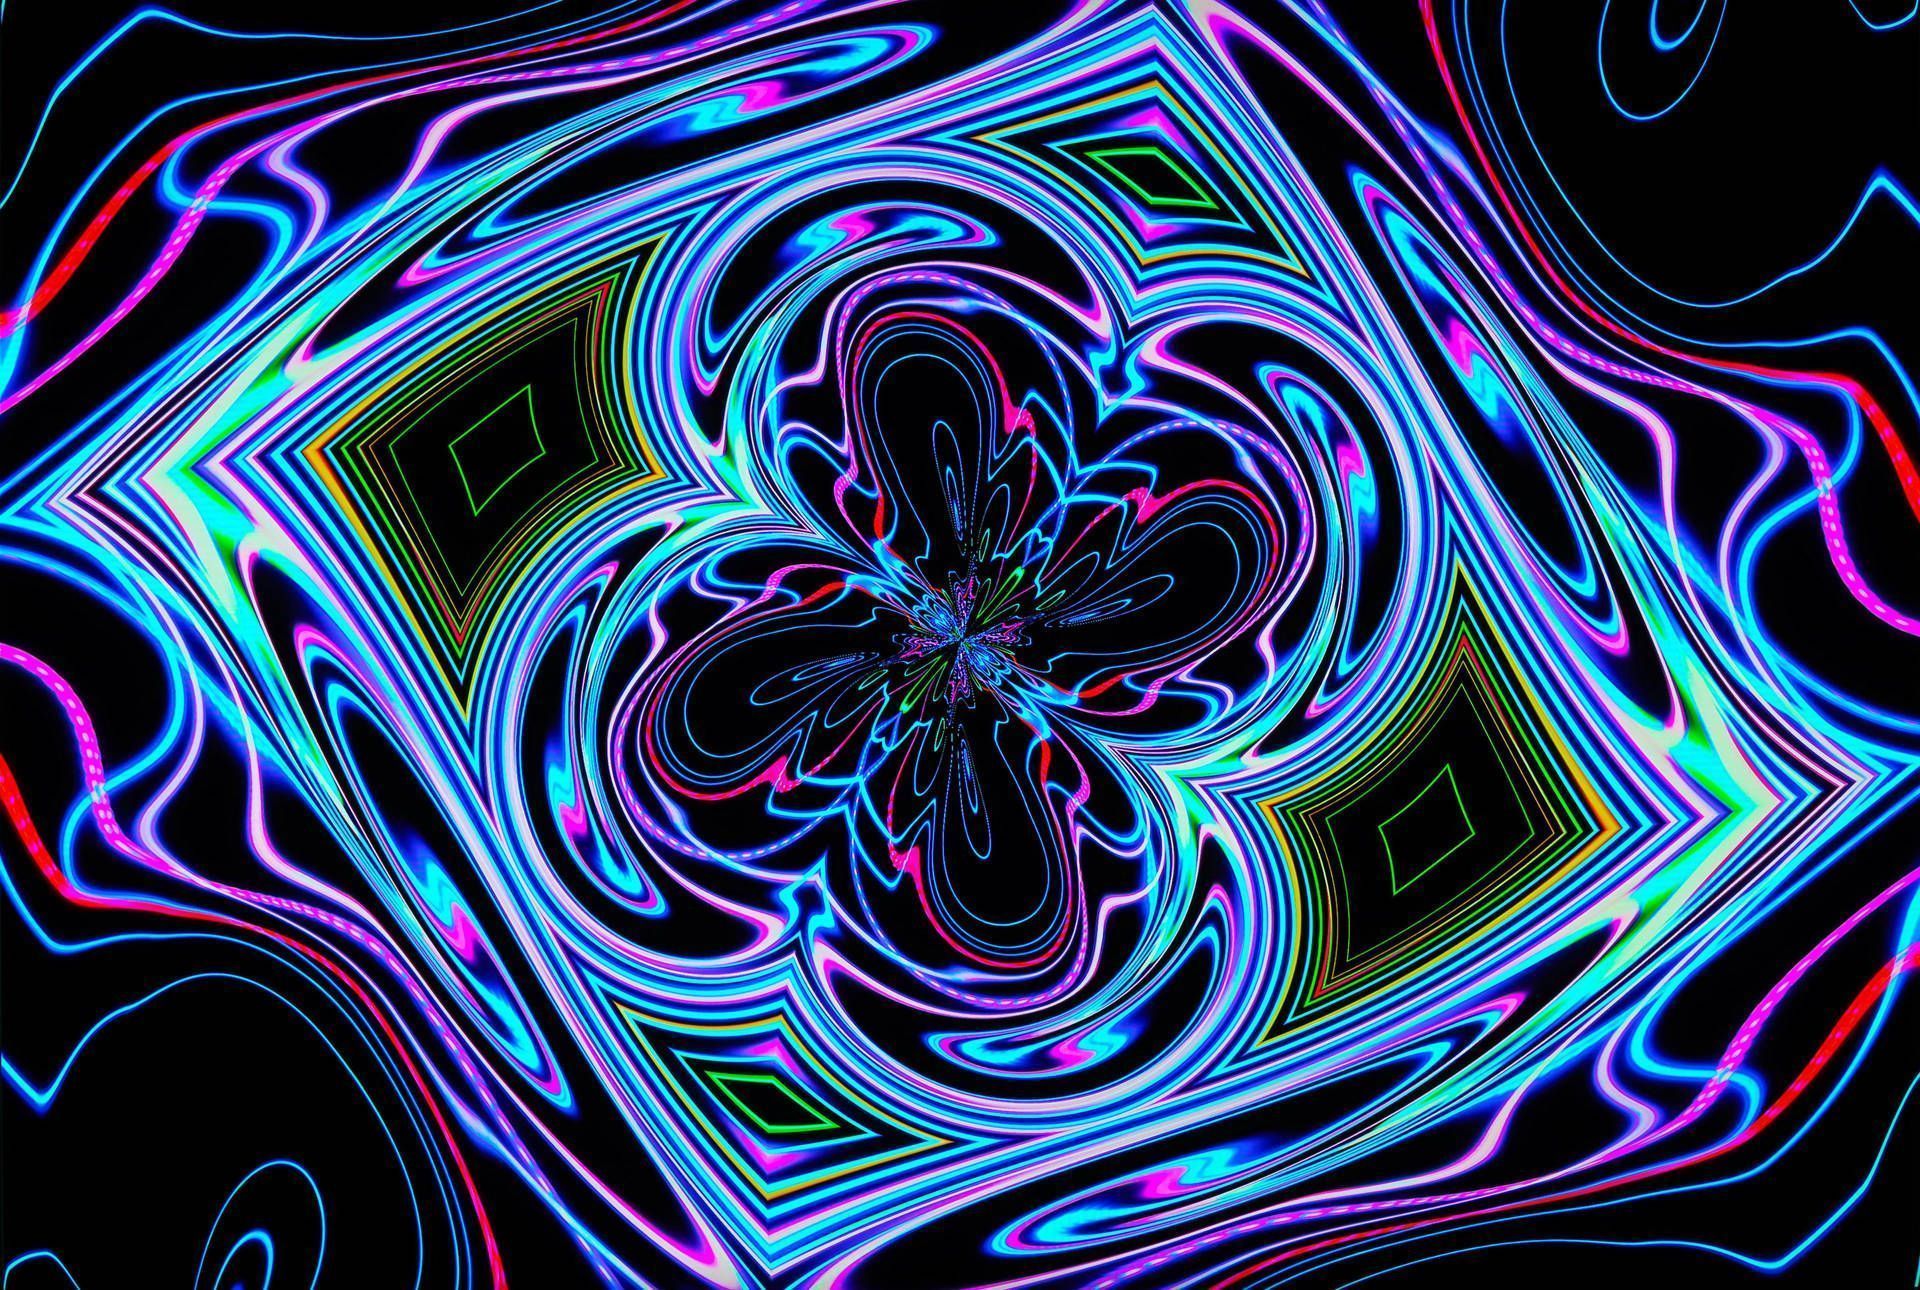 A colorful abstract design on black background - Trippy, dark vaporwave